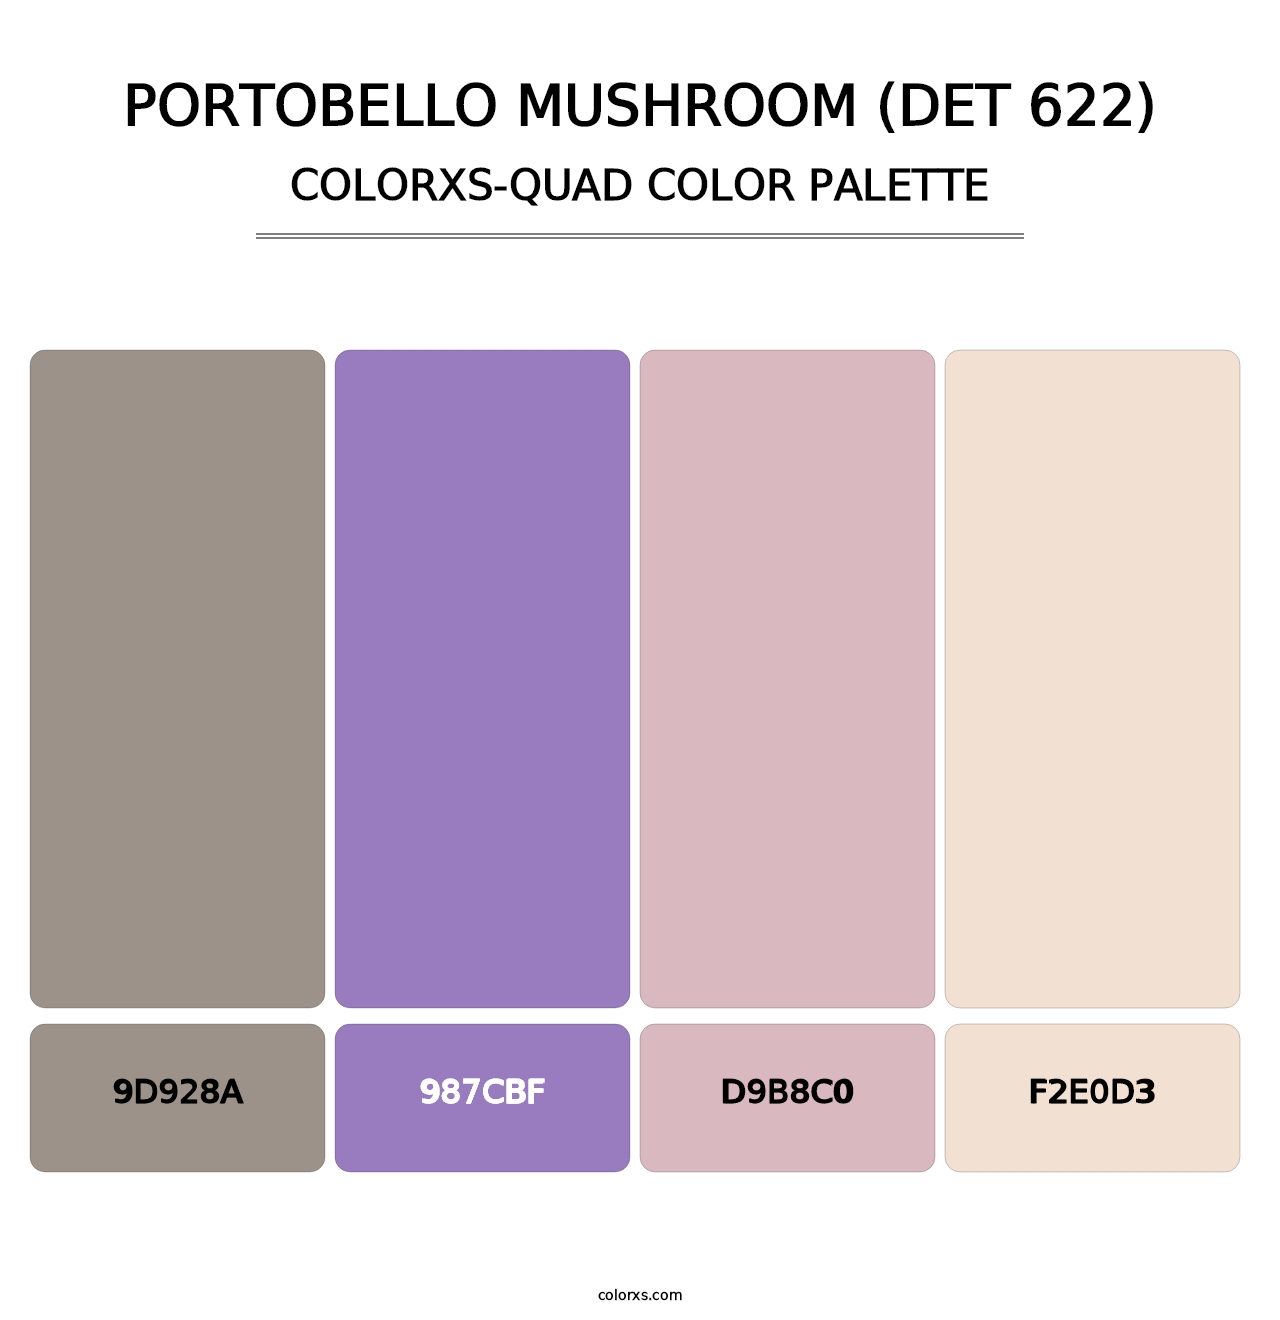 Portobello Mushroom (DET 622) - Colorxs Quad Palette